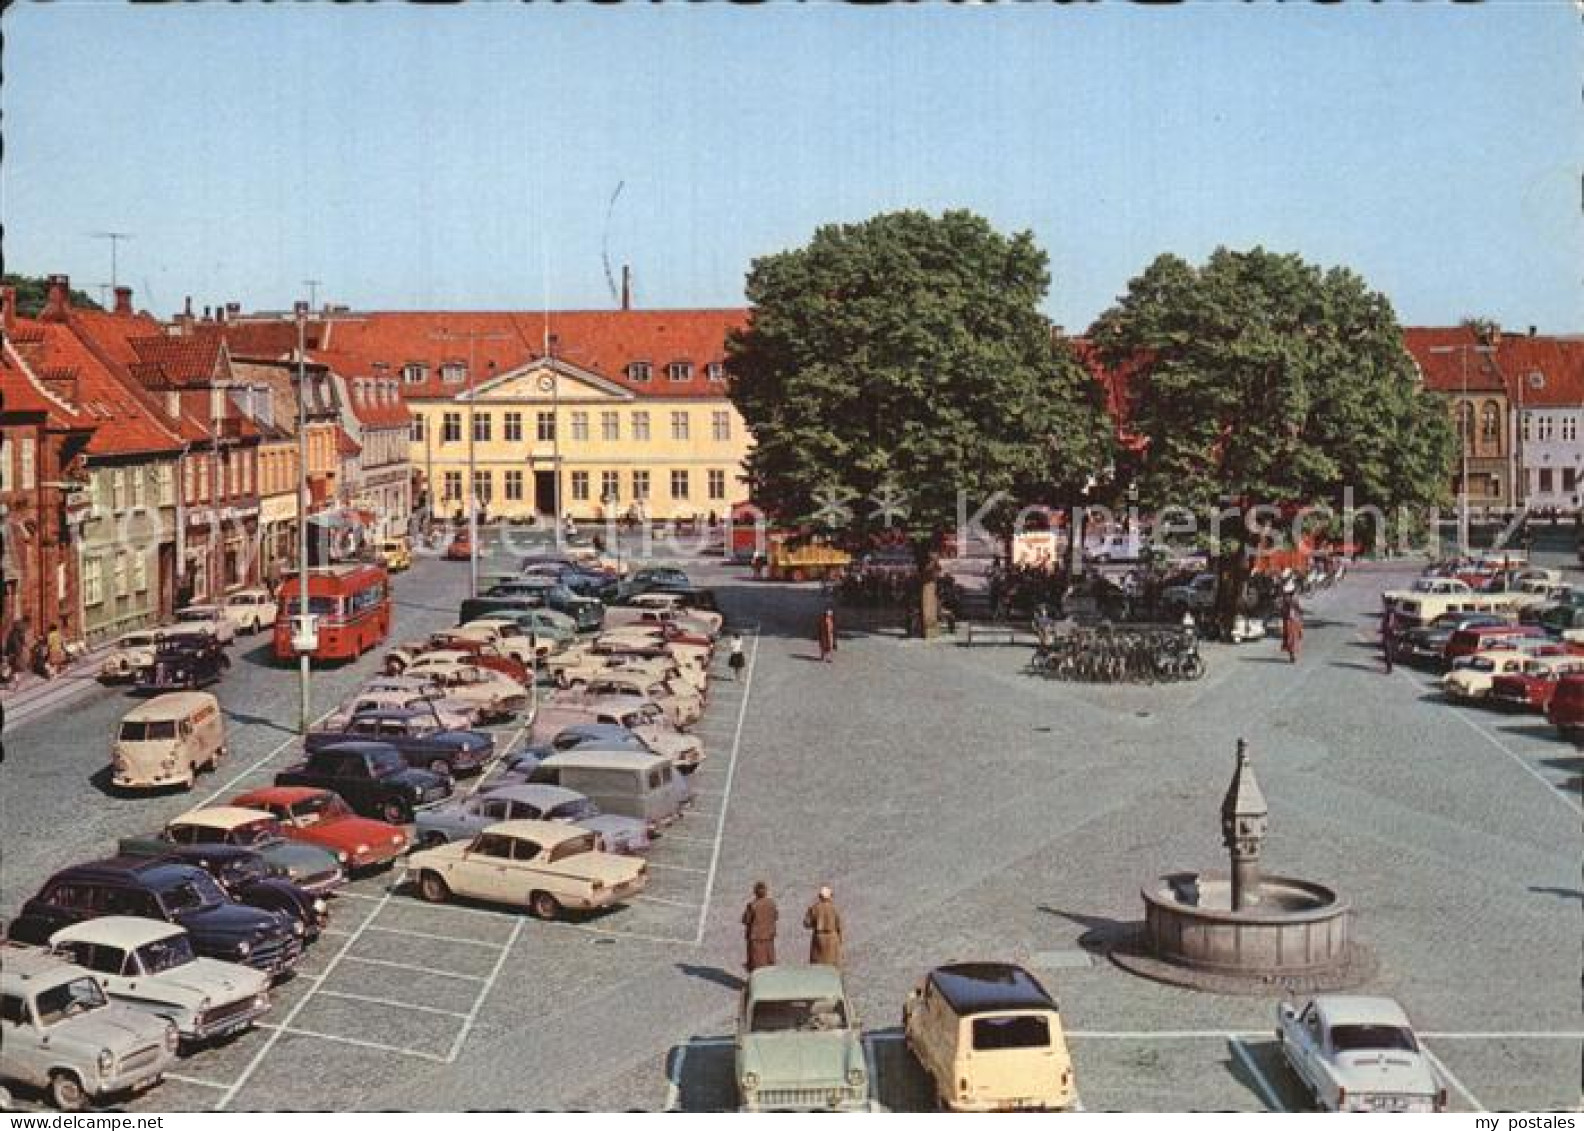 72581973 Koge Marktplatz Koge - Danemark